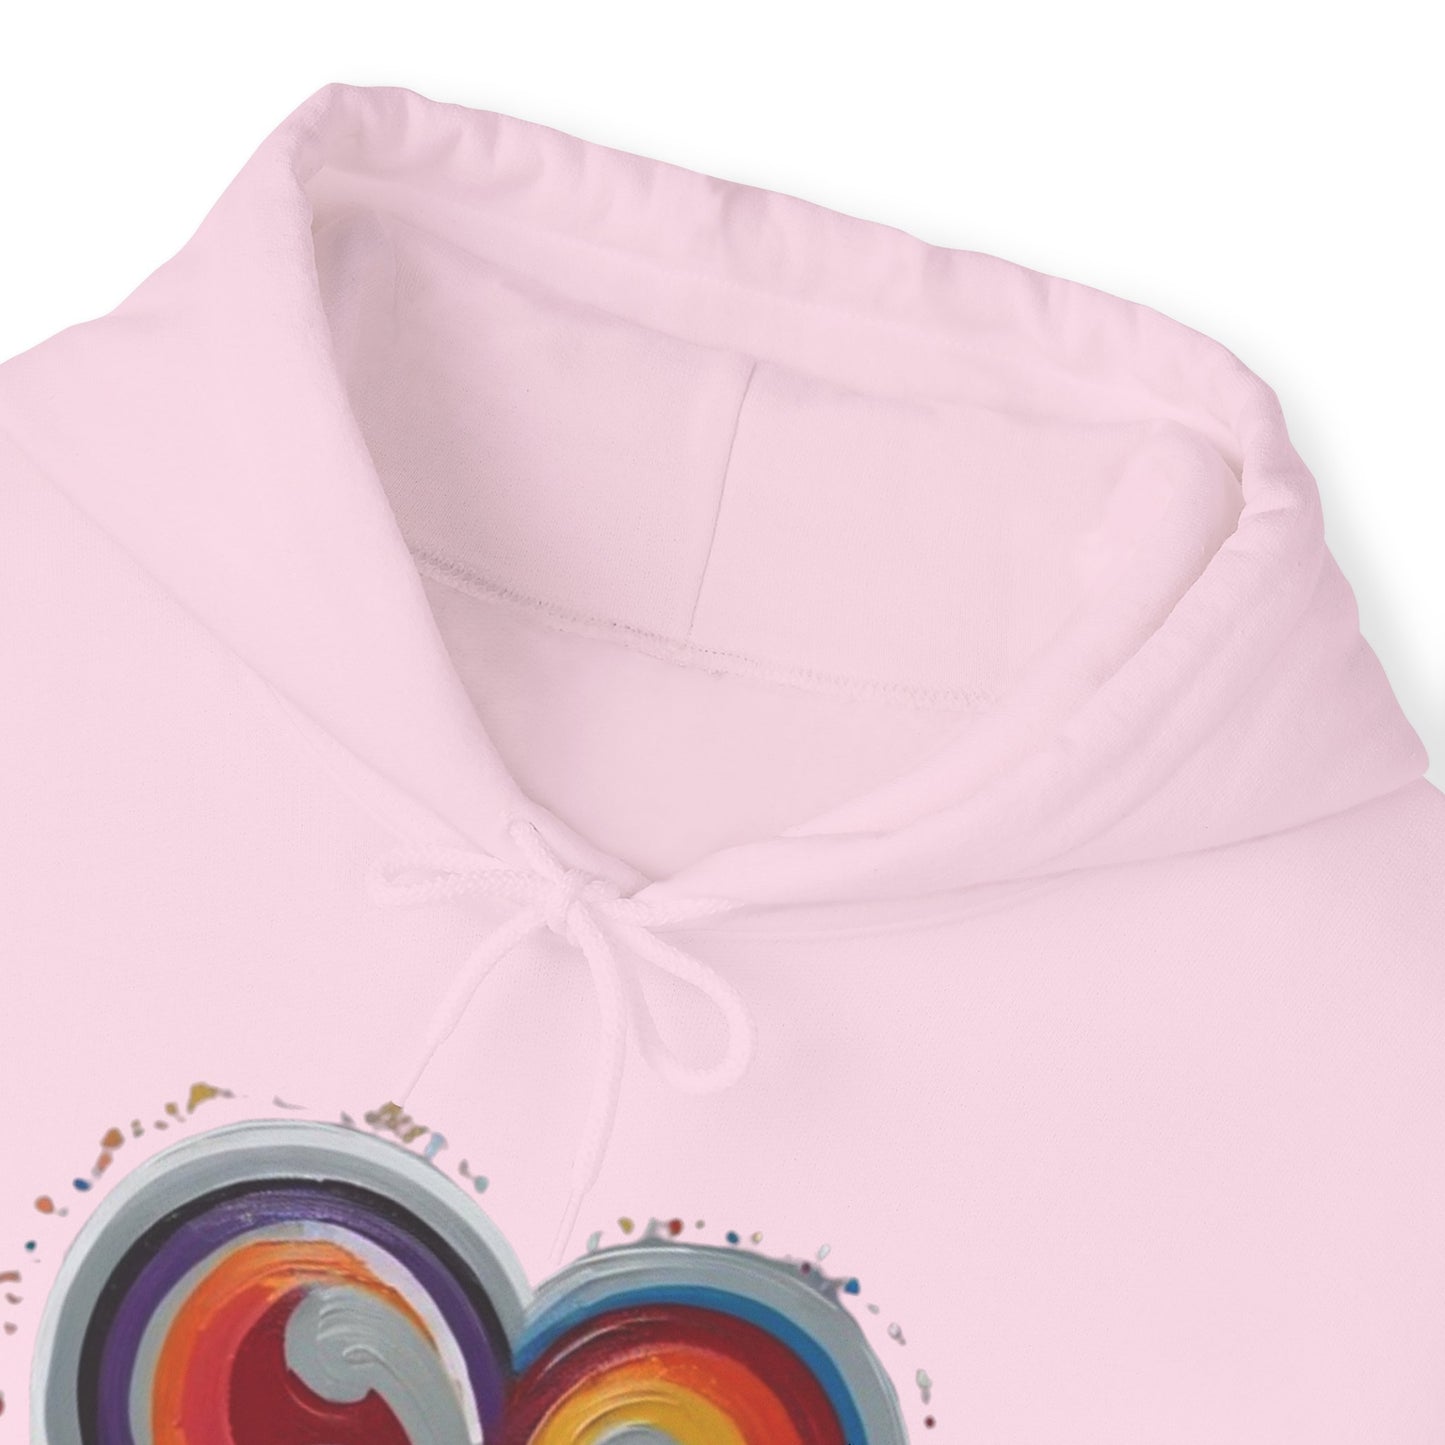 Colourful Grey Love Heart - Unisex Hooded Sweatshirt